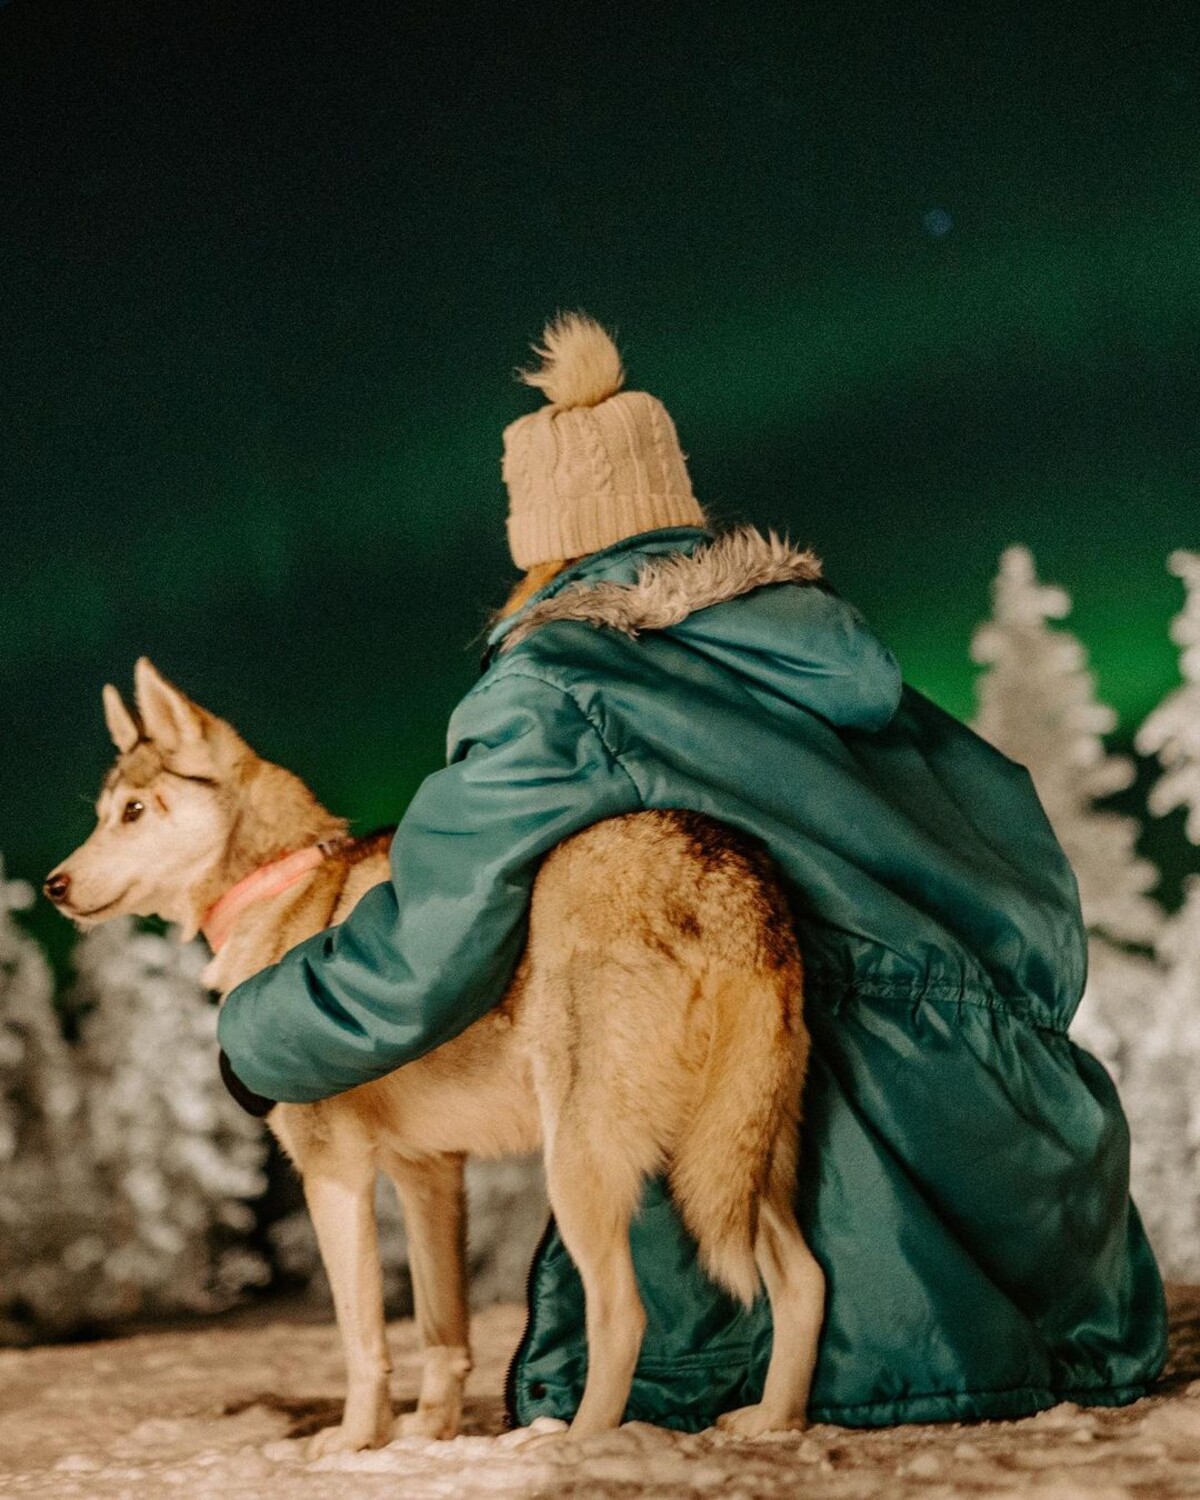 Lucia žije v Laponsku, kde pracuje na husky farme.